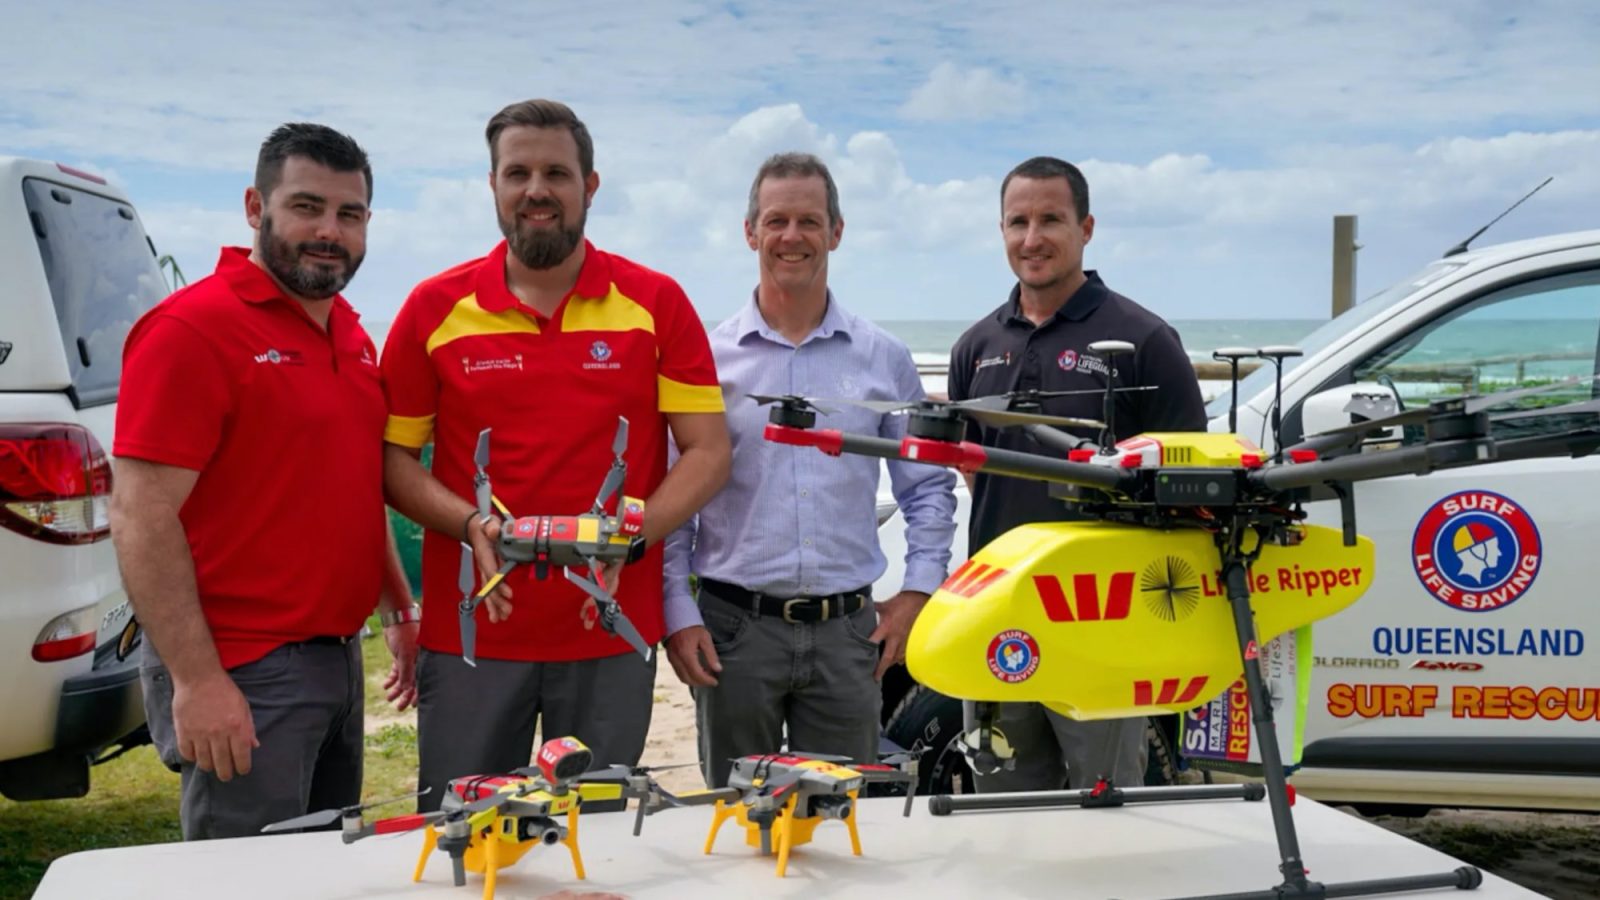 Dye-dropping DJI Mavic 2 drones to help stop drownings in Australia